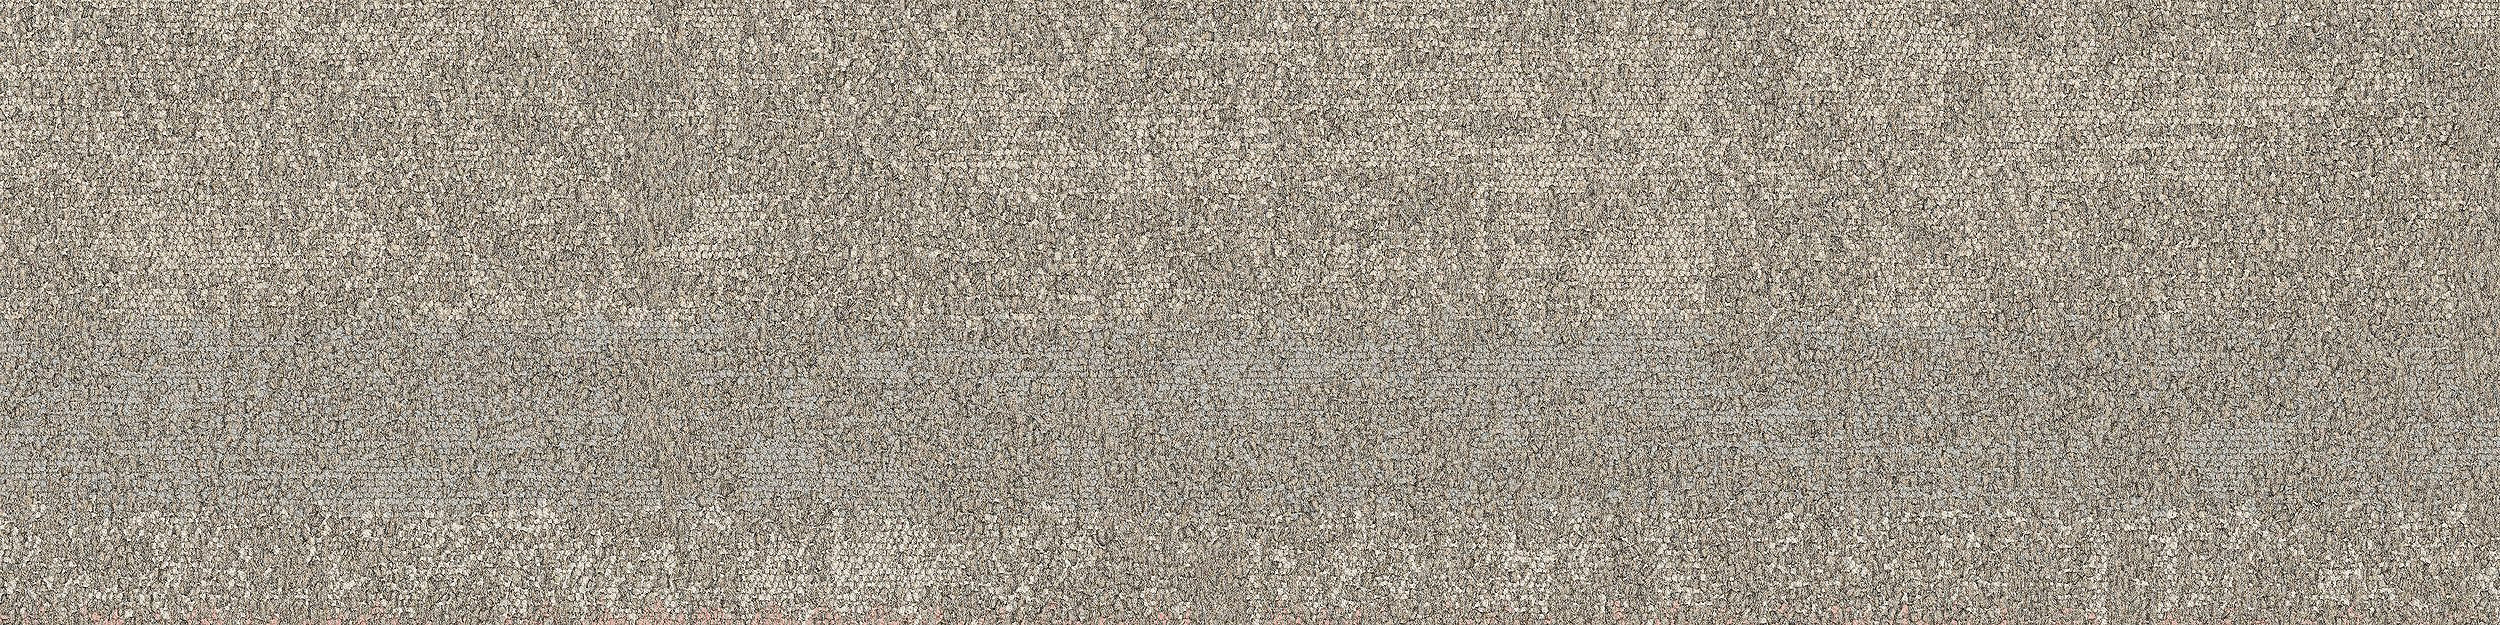 Up At Dawn Carpet Tile In Rhodium image number 8